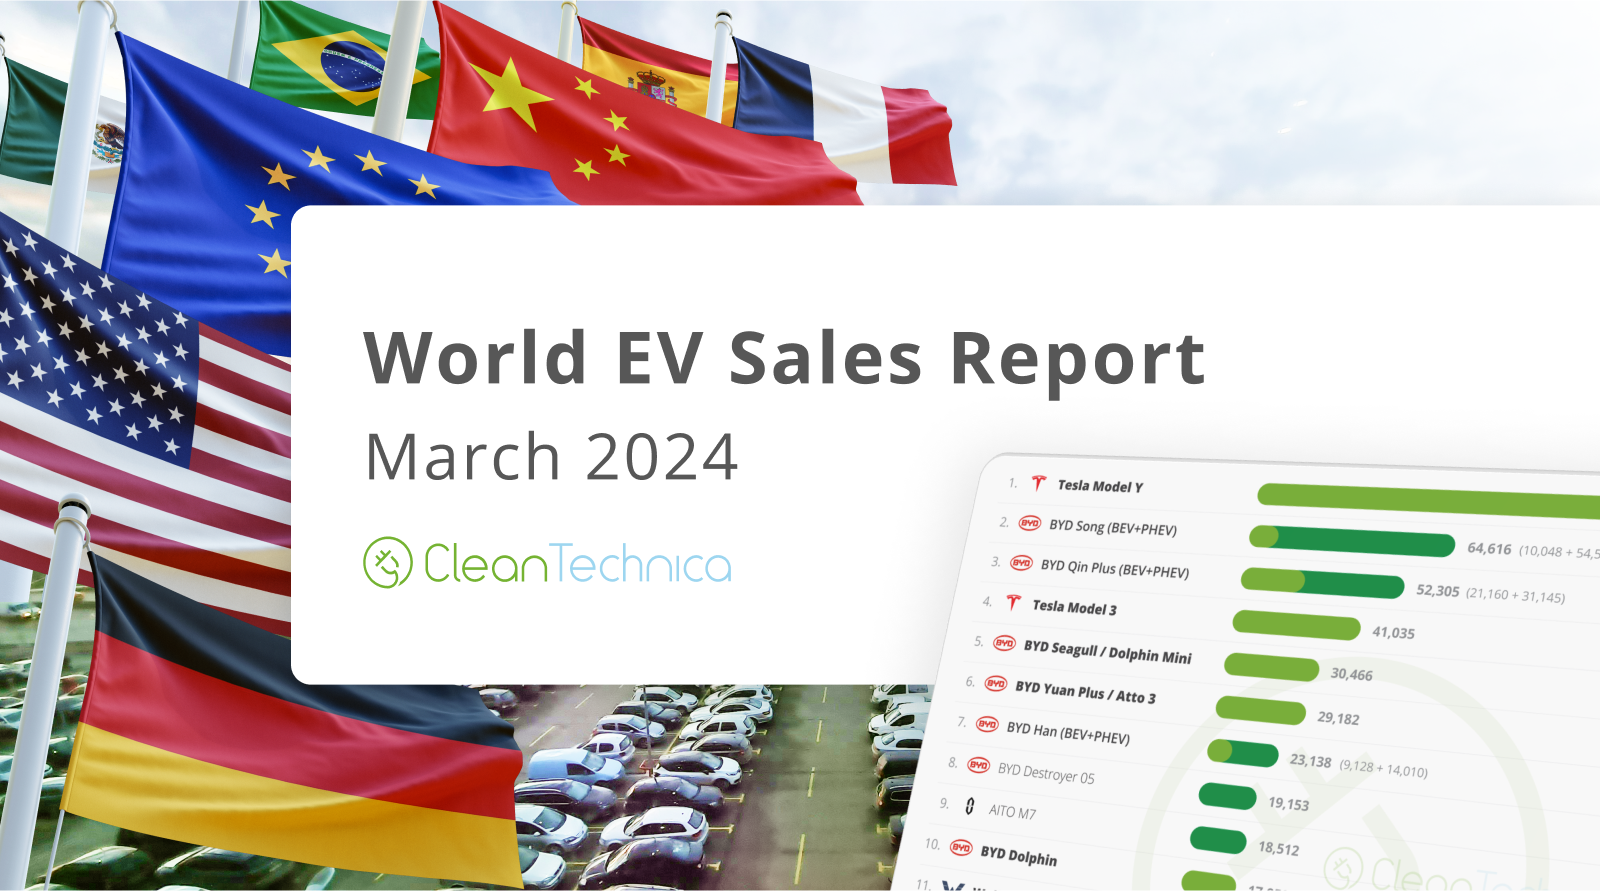 What Falling Sales? Global EV Sales Grow 19% in March!